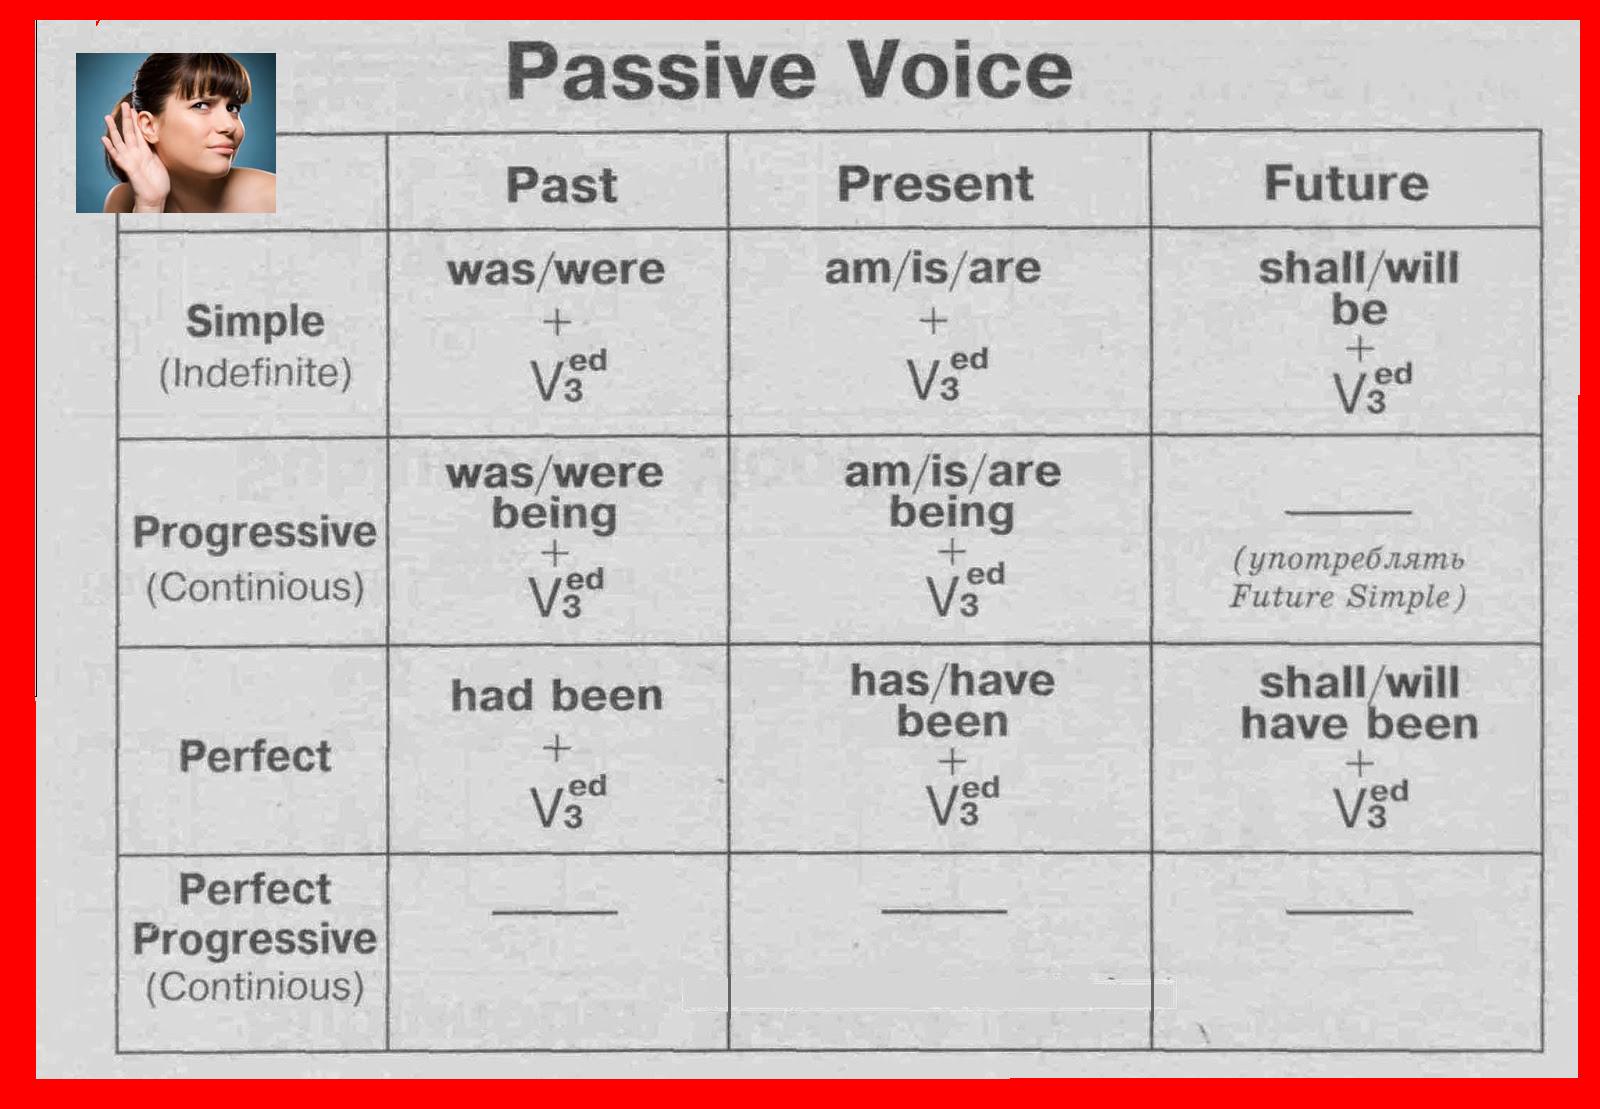 Passive voice play. Пассивный залог. Таблица рпасивного залолоаг. Пассивный залог таблица. Passive Voice таблица.